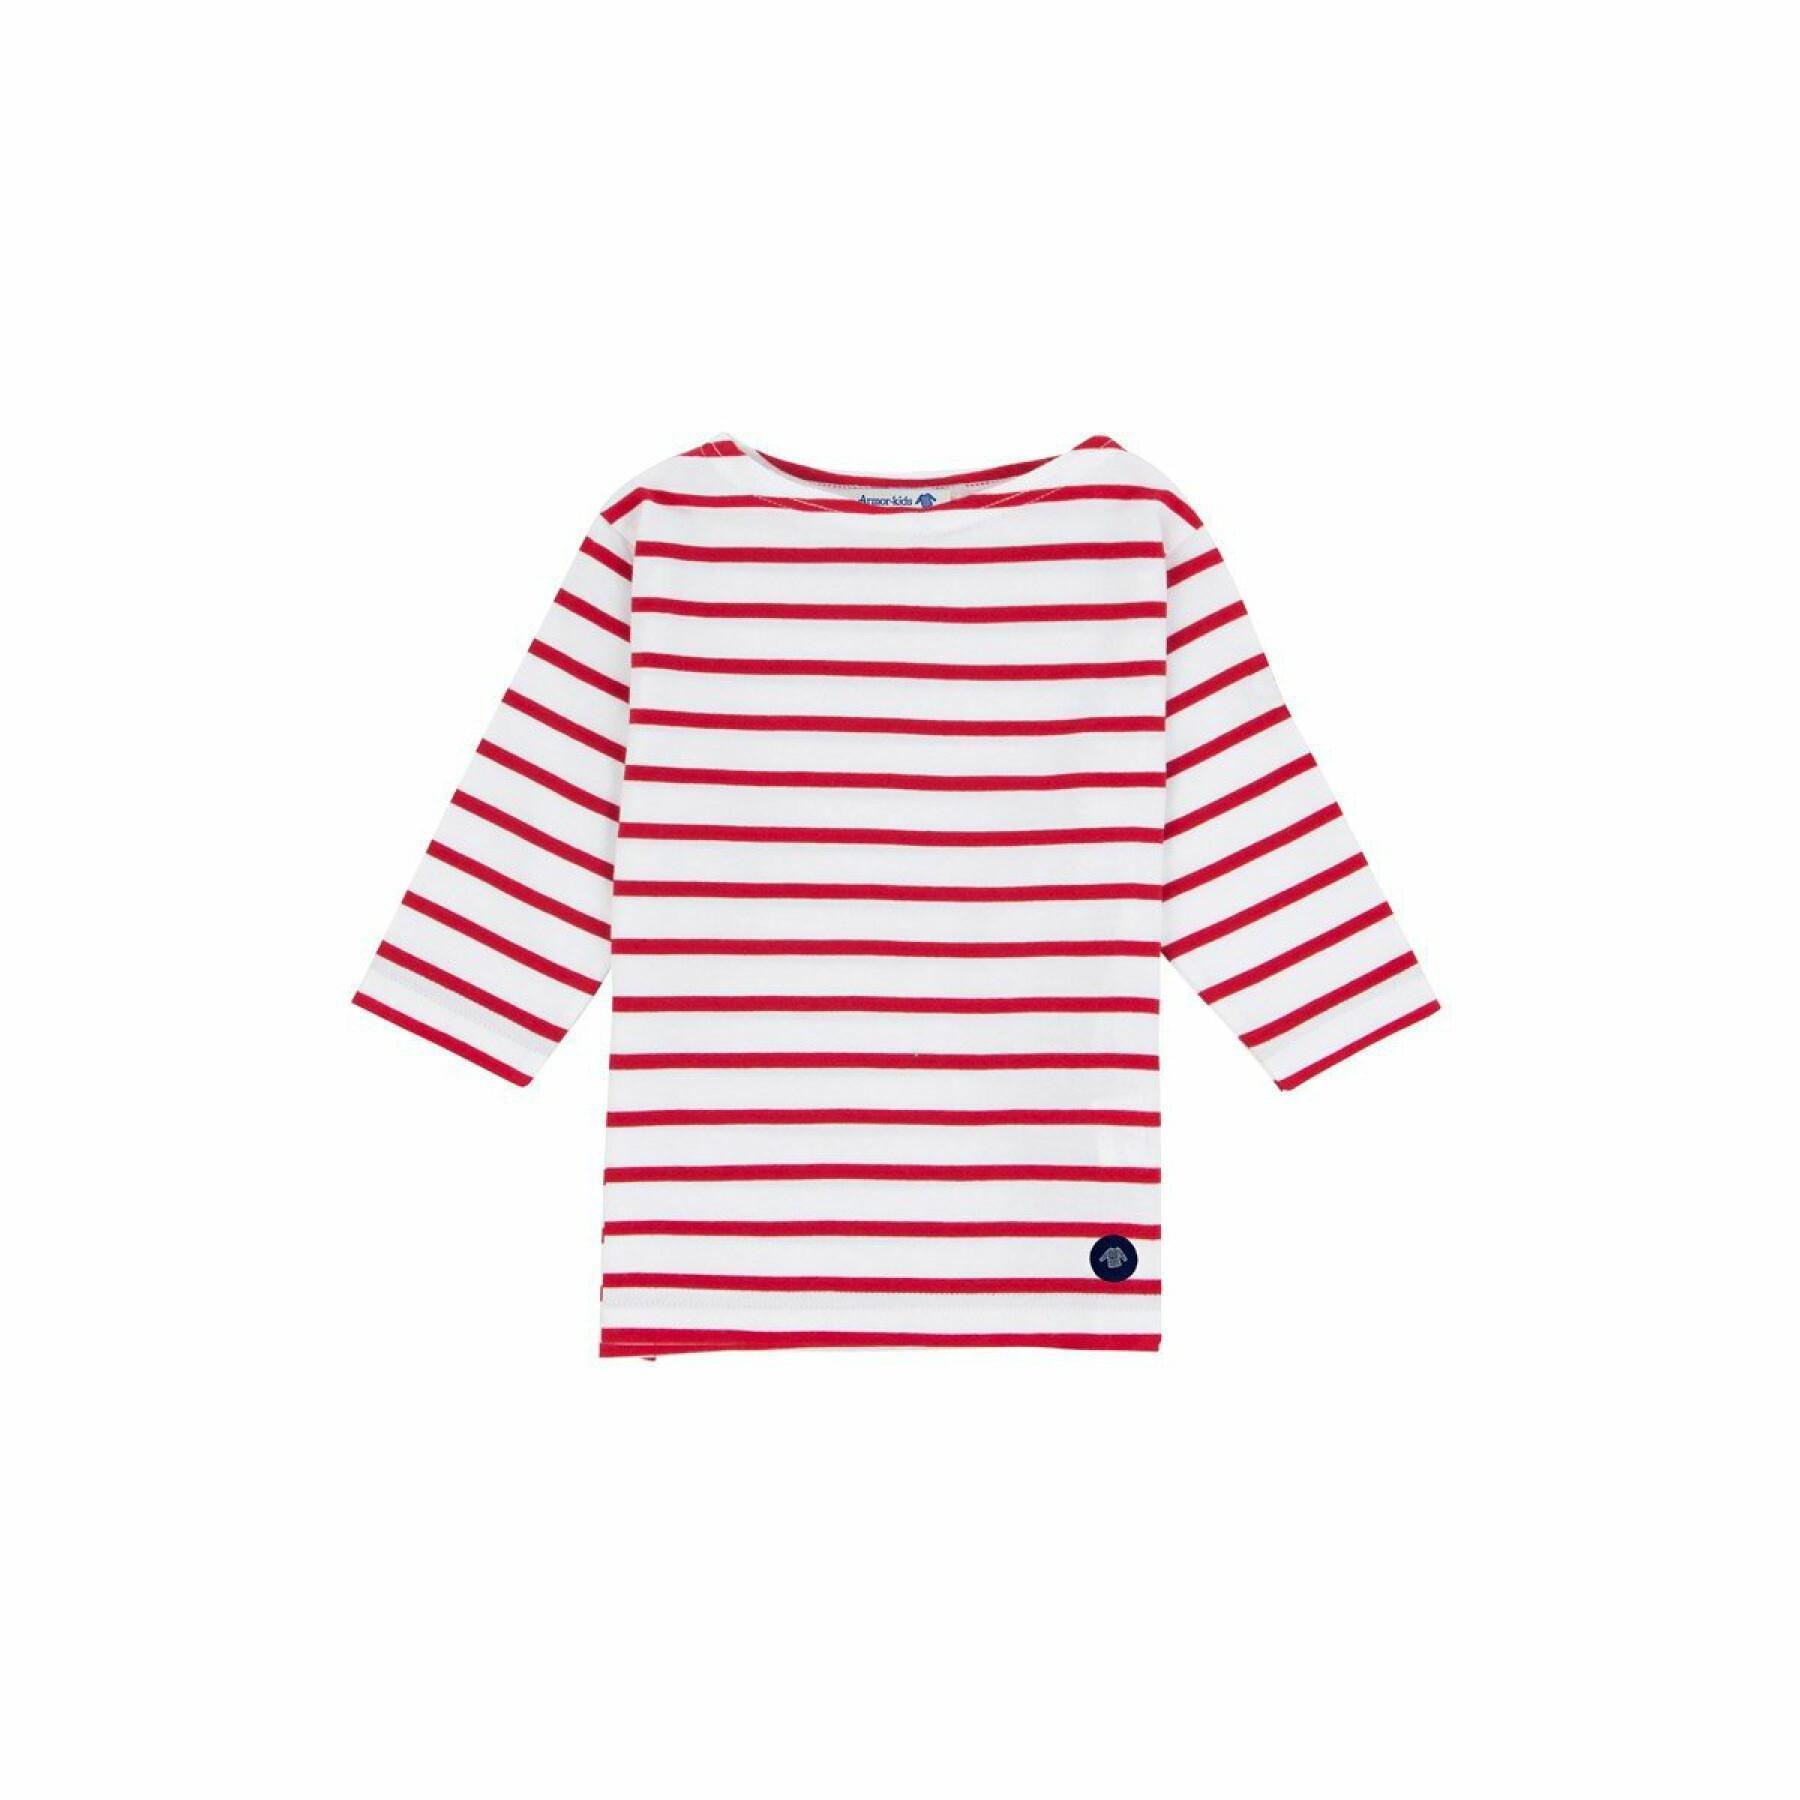 Camiseta marinera para niños Armor-Lux beg meil